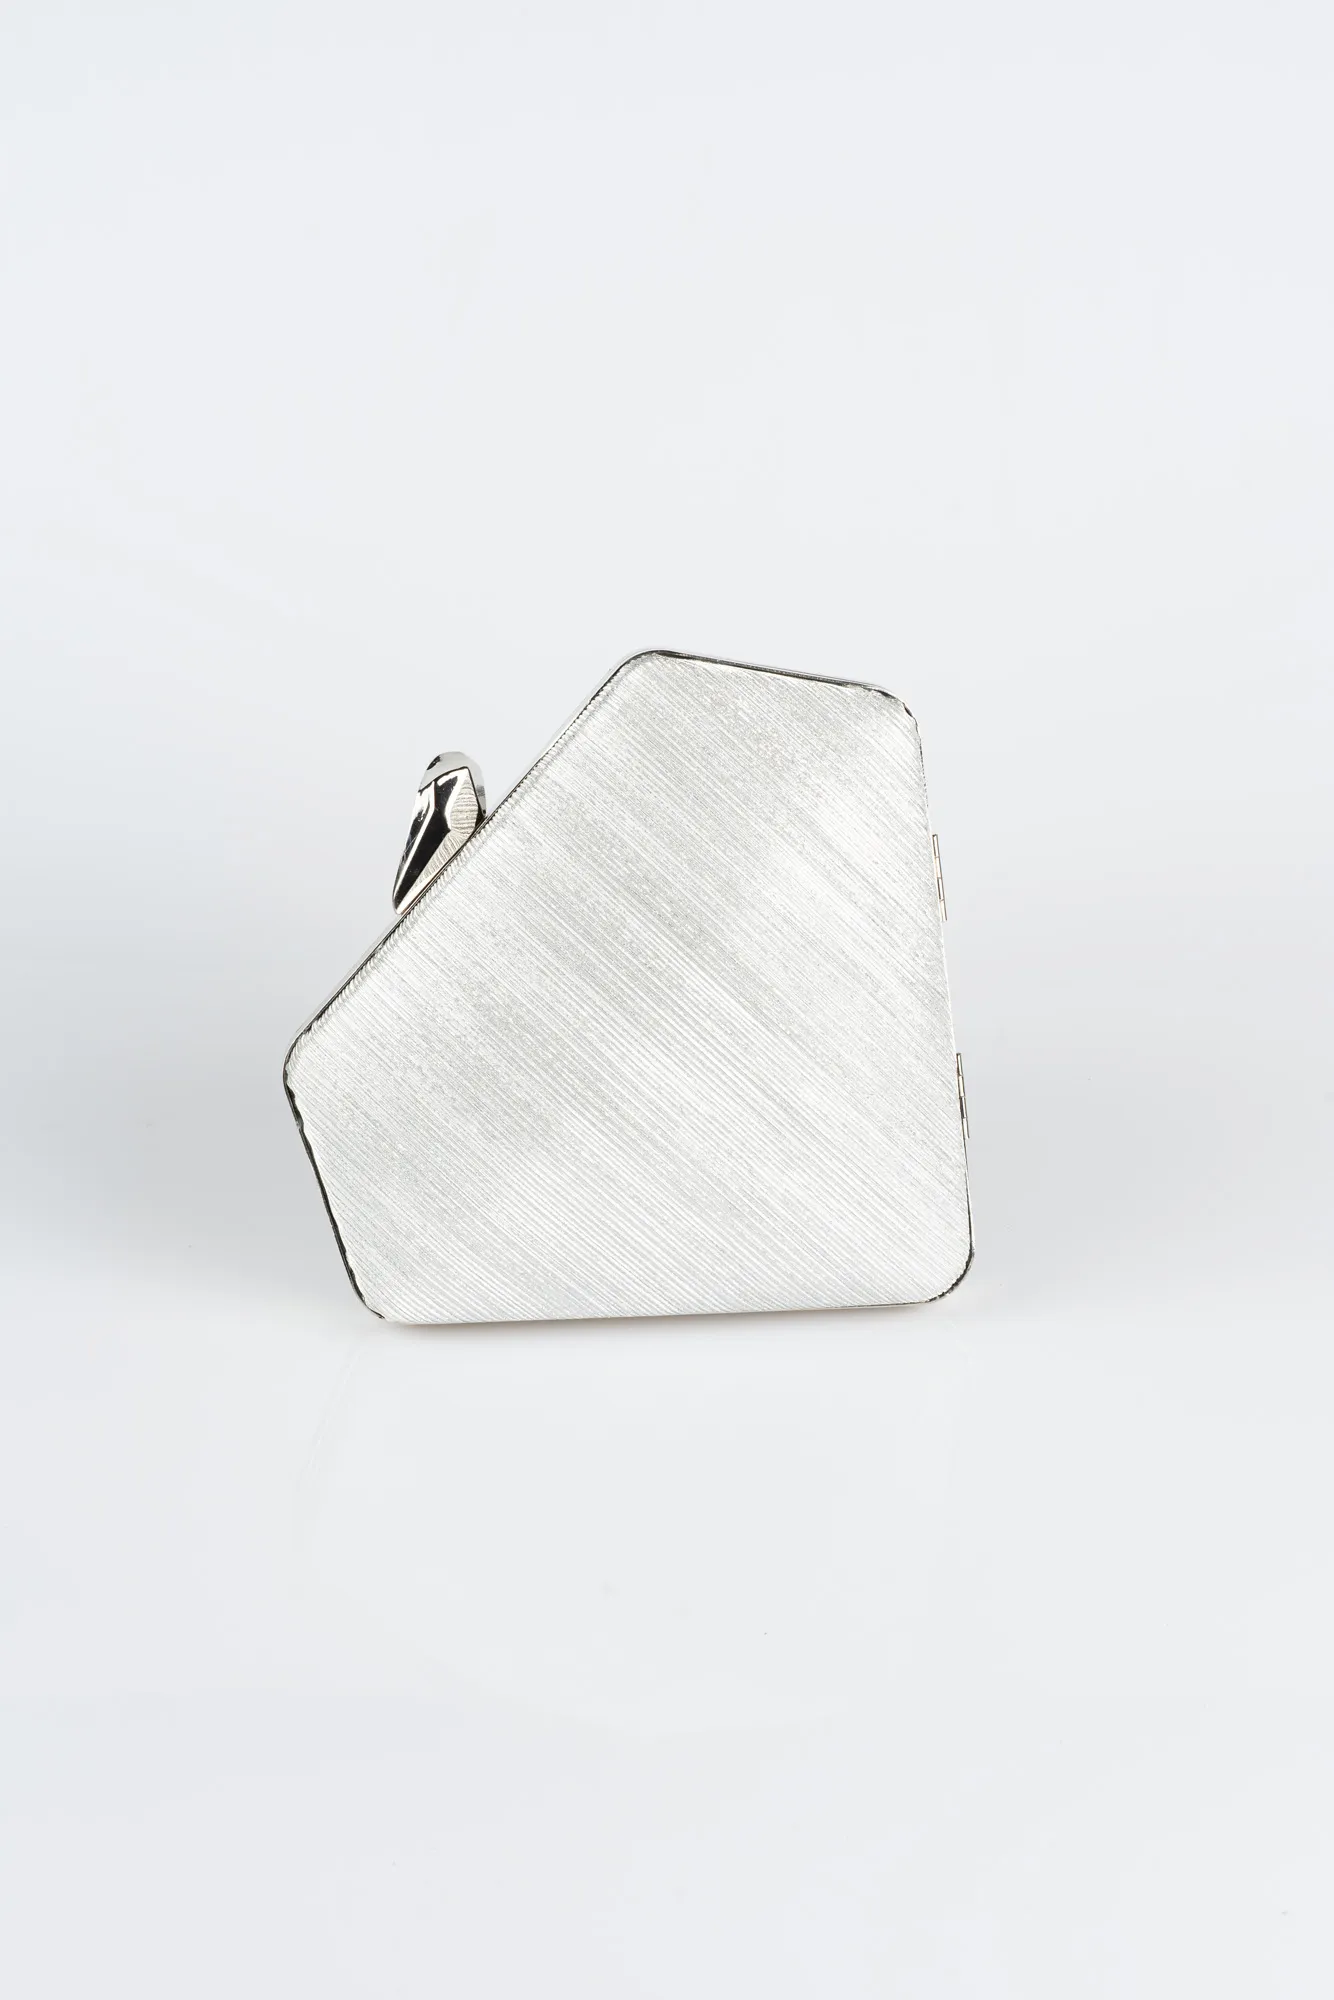 Silver-Box Bag V222